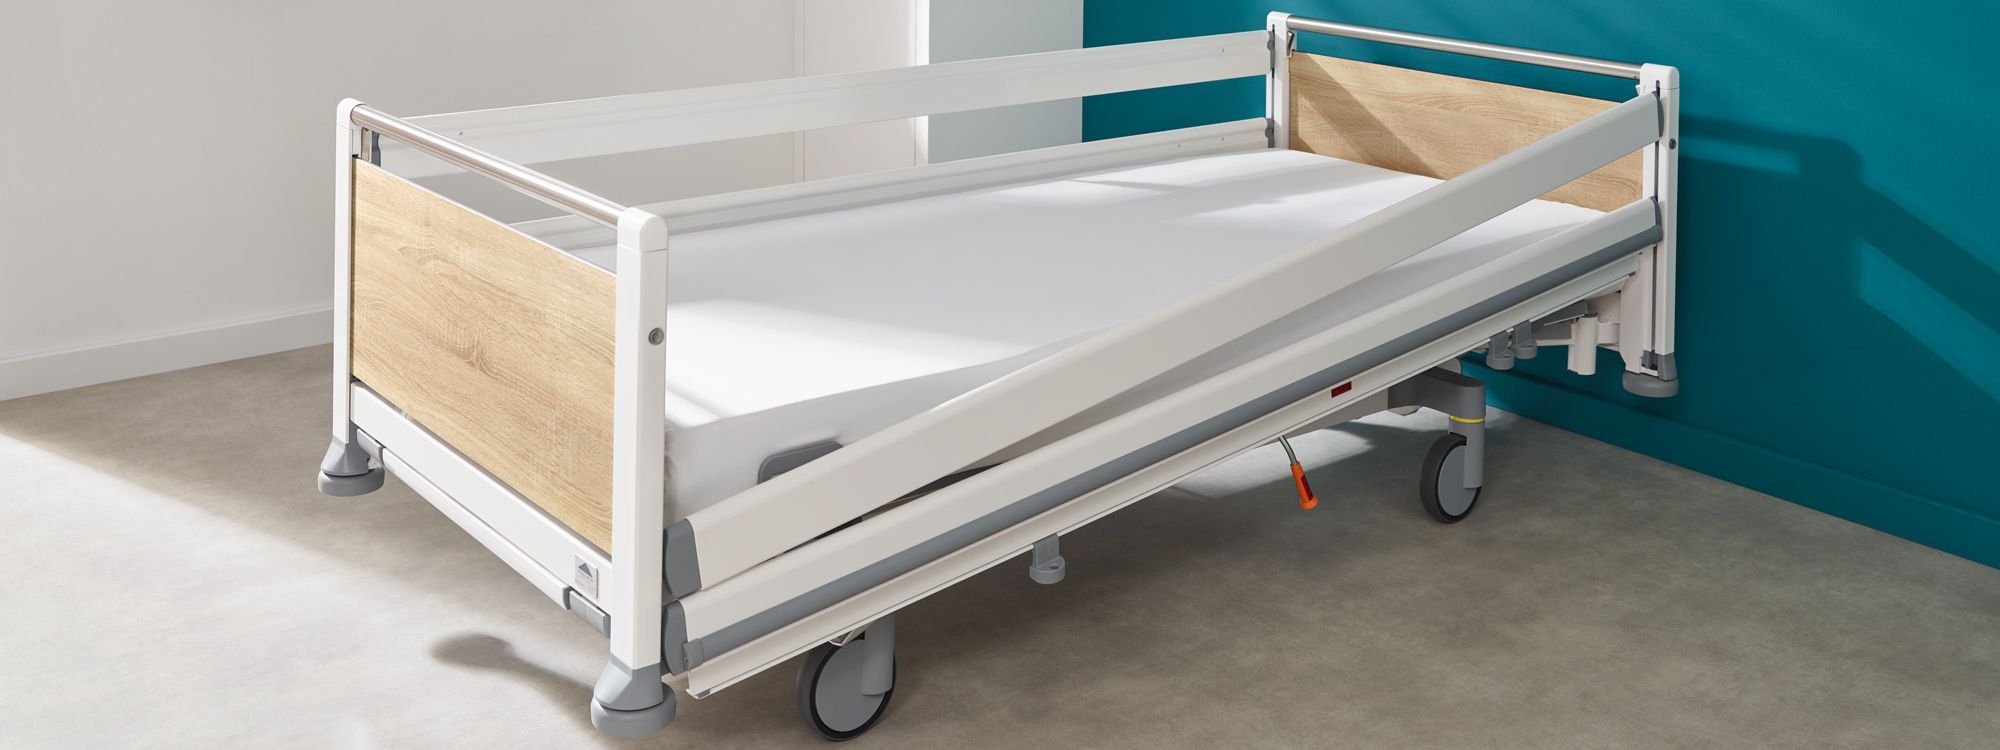 Diagonally raised full-length safety side on the Seta pro hospital bed